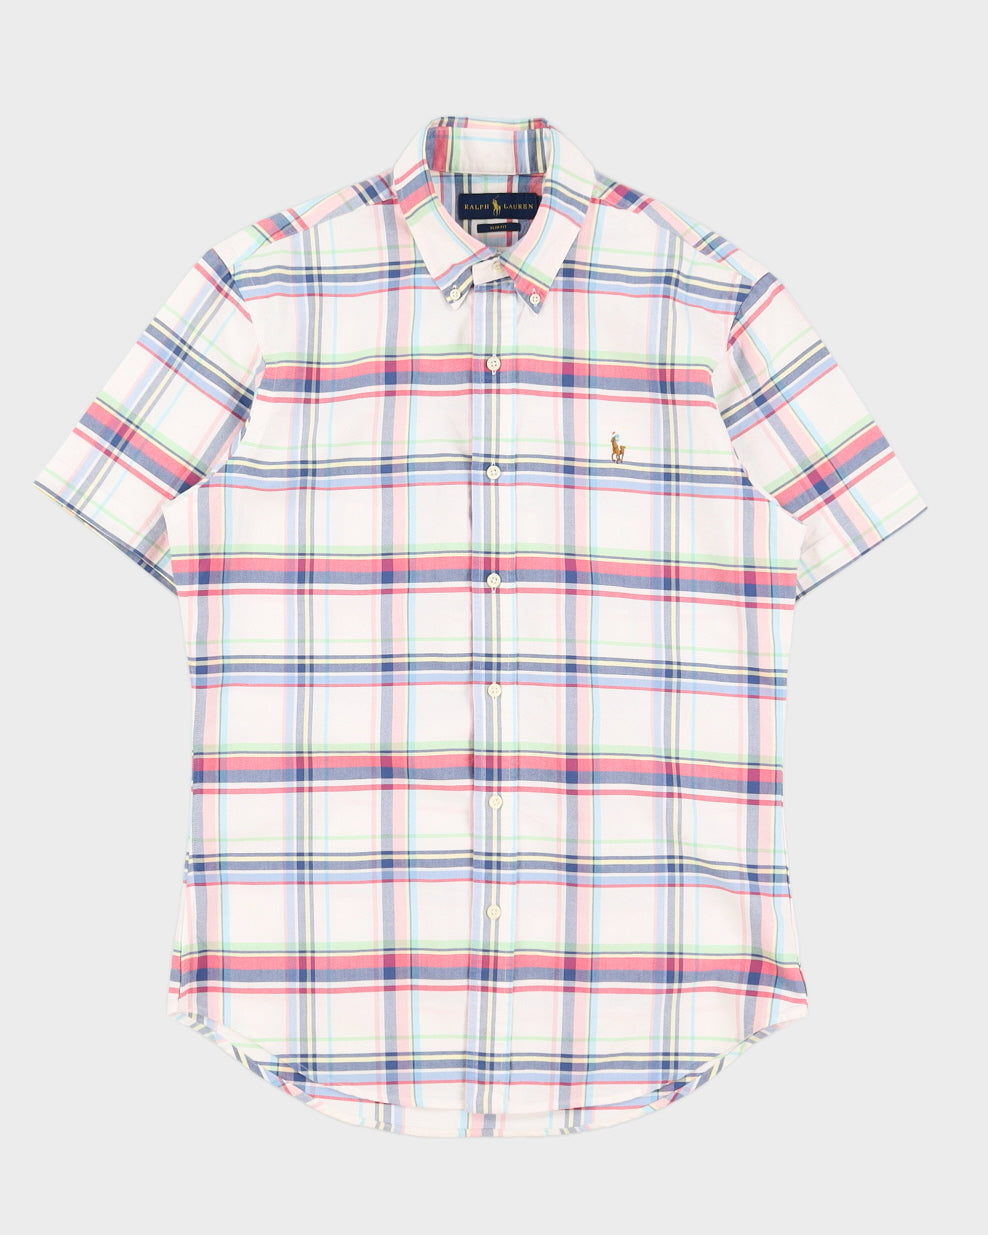 Ralph Lauren Multi Coloured Plaid Shirt - M